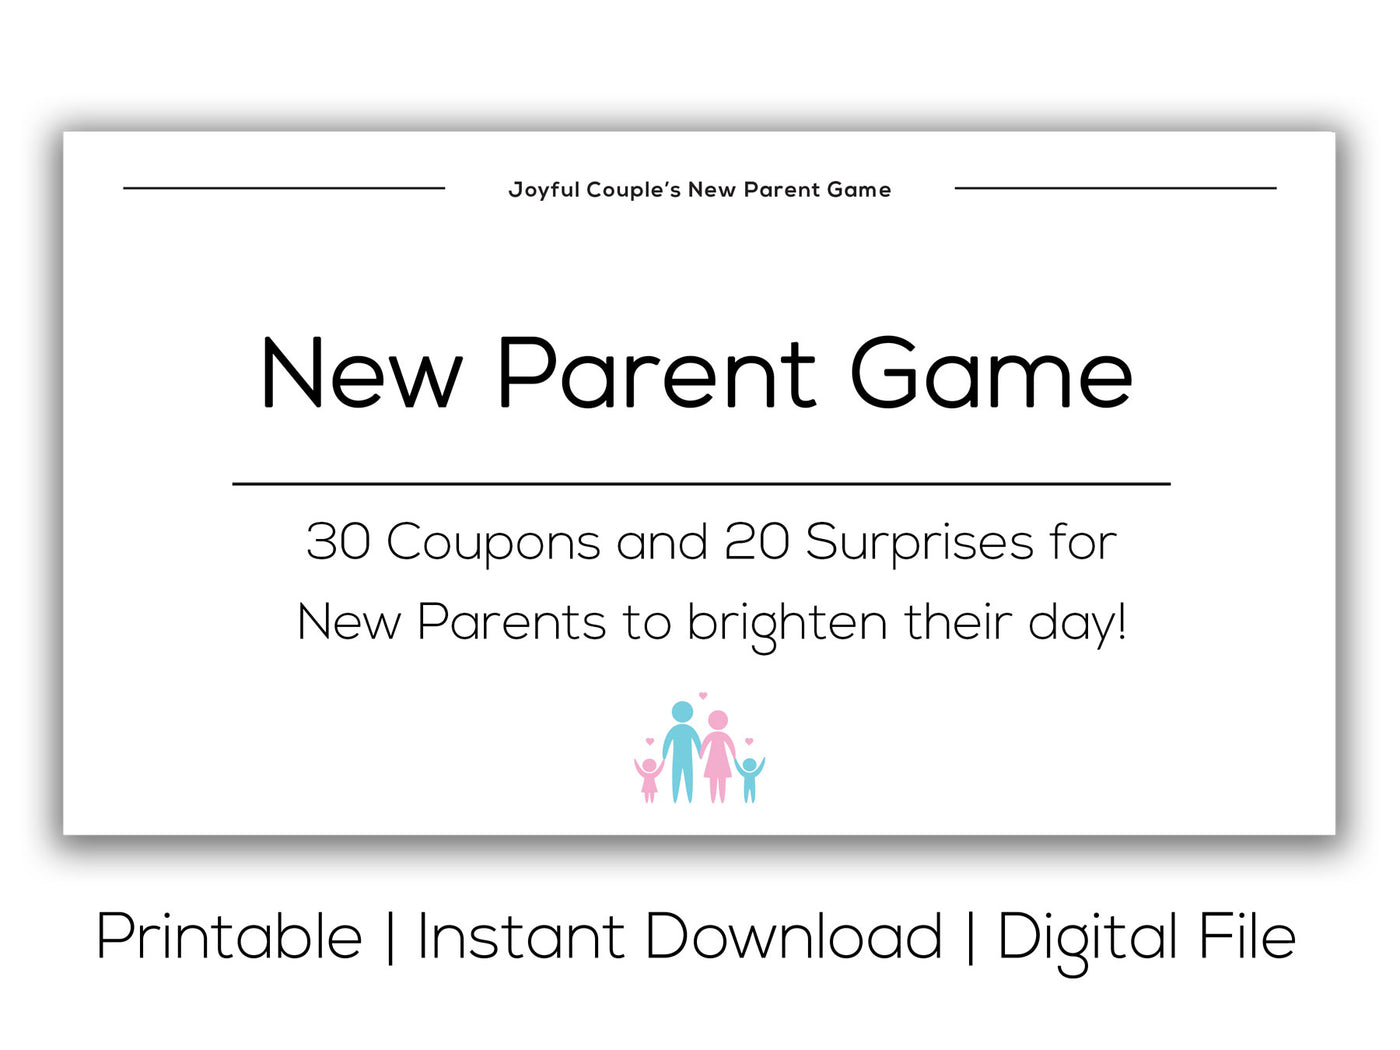 Joyful Couple's New Parent Game. Printable